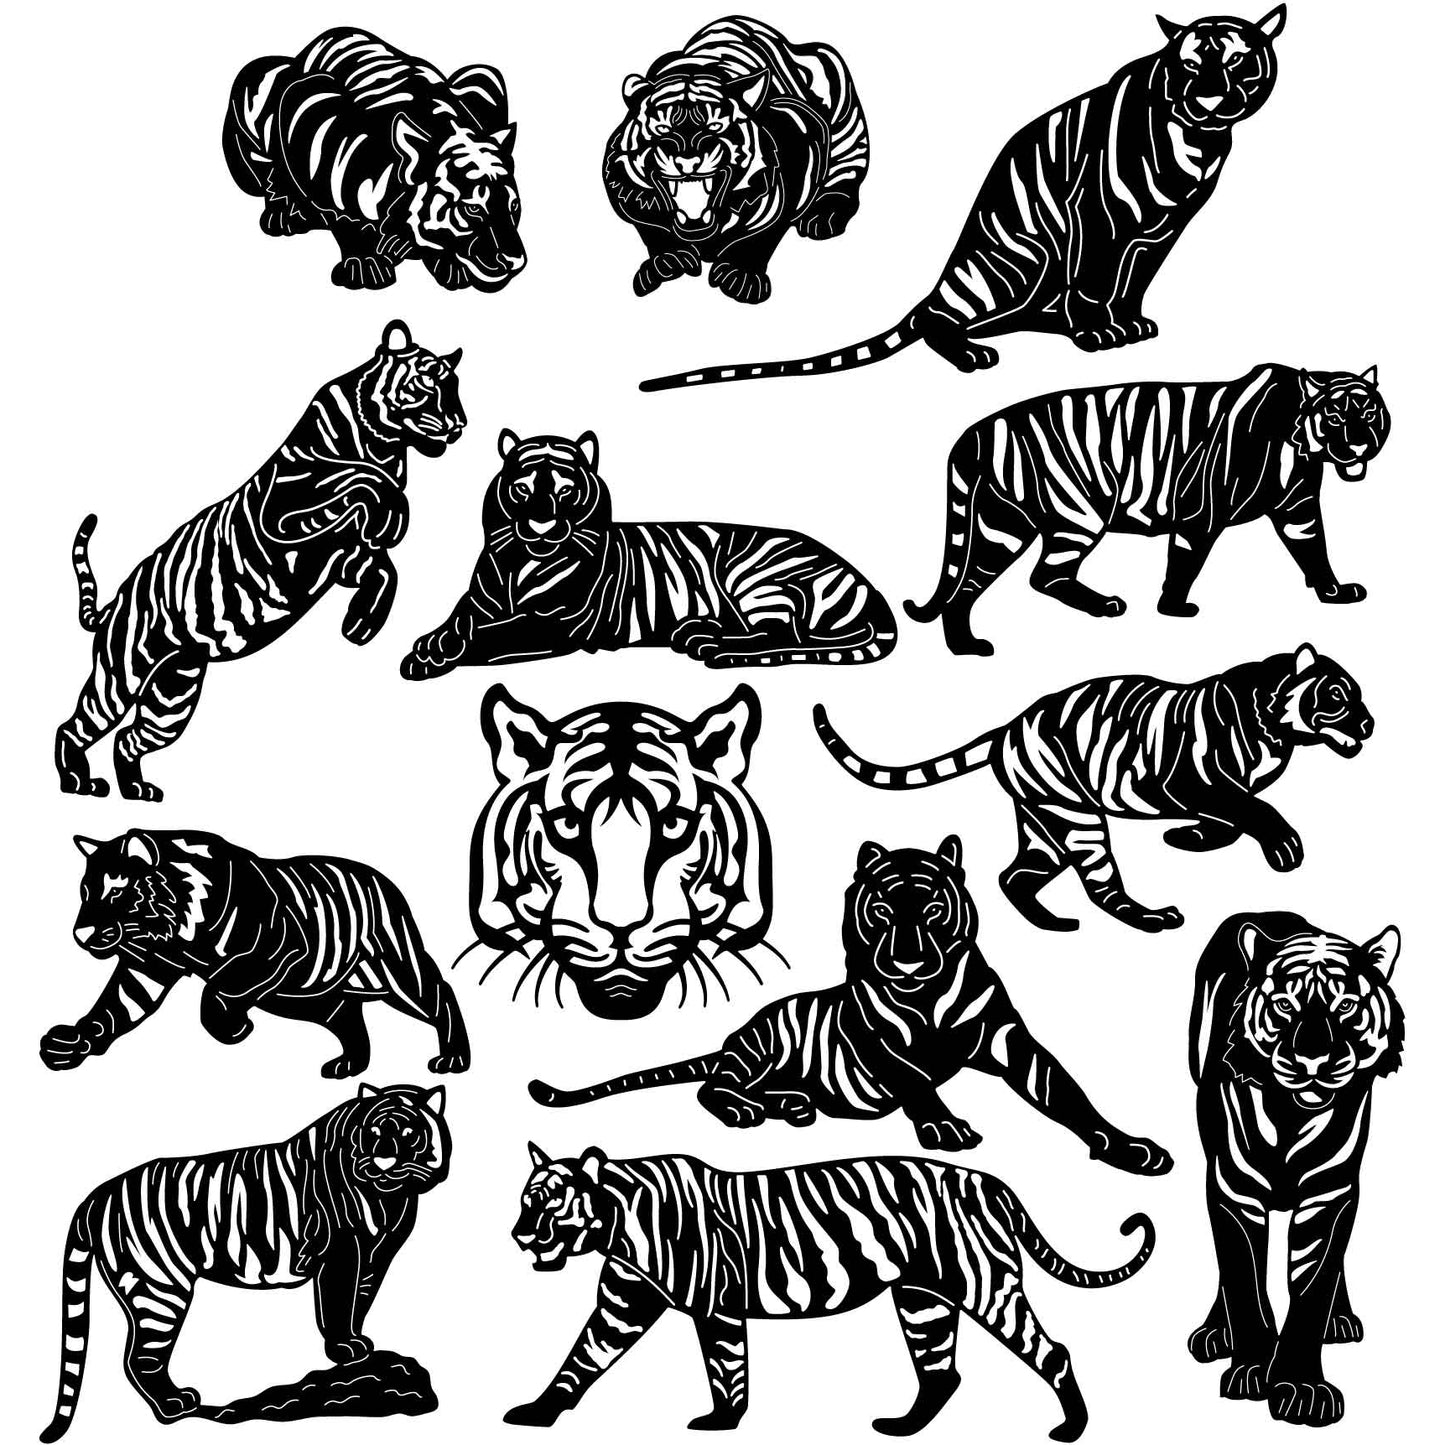 Bengal Tigers-DXFforCNC.com-DXF Files cut ready cnc machines